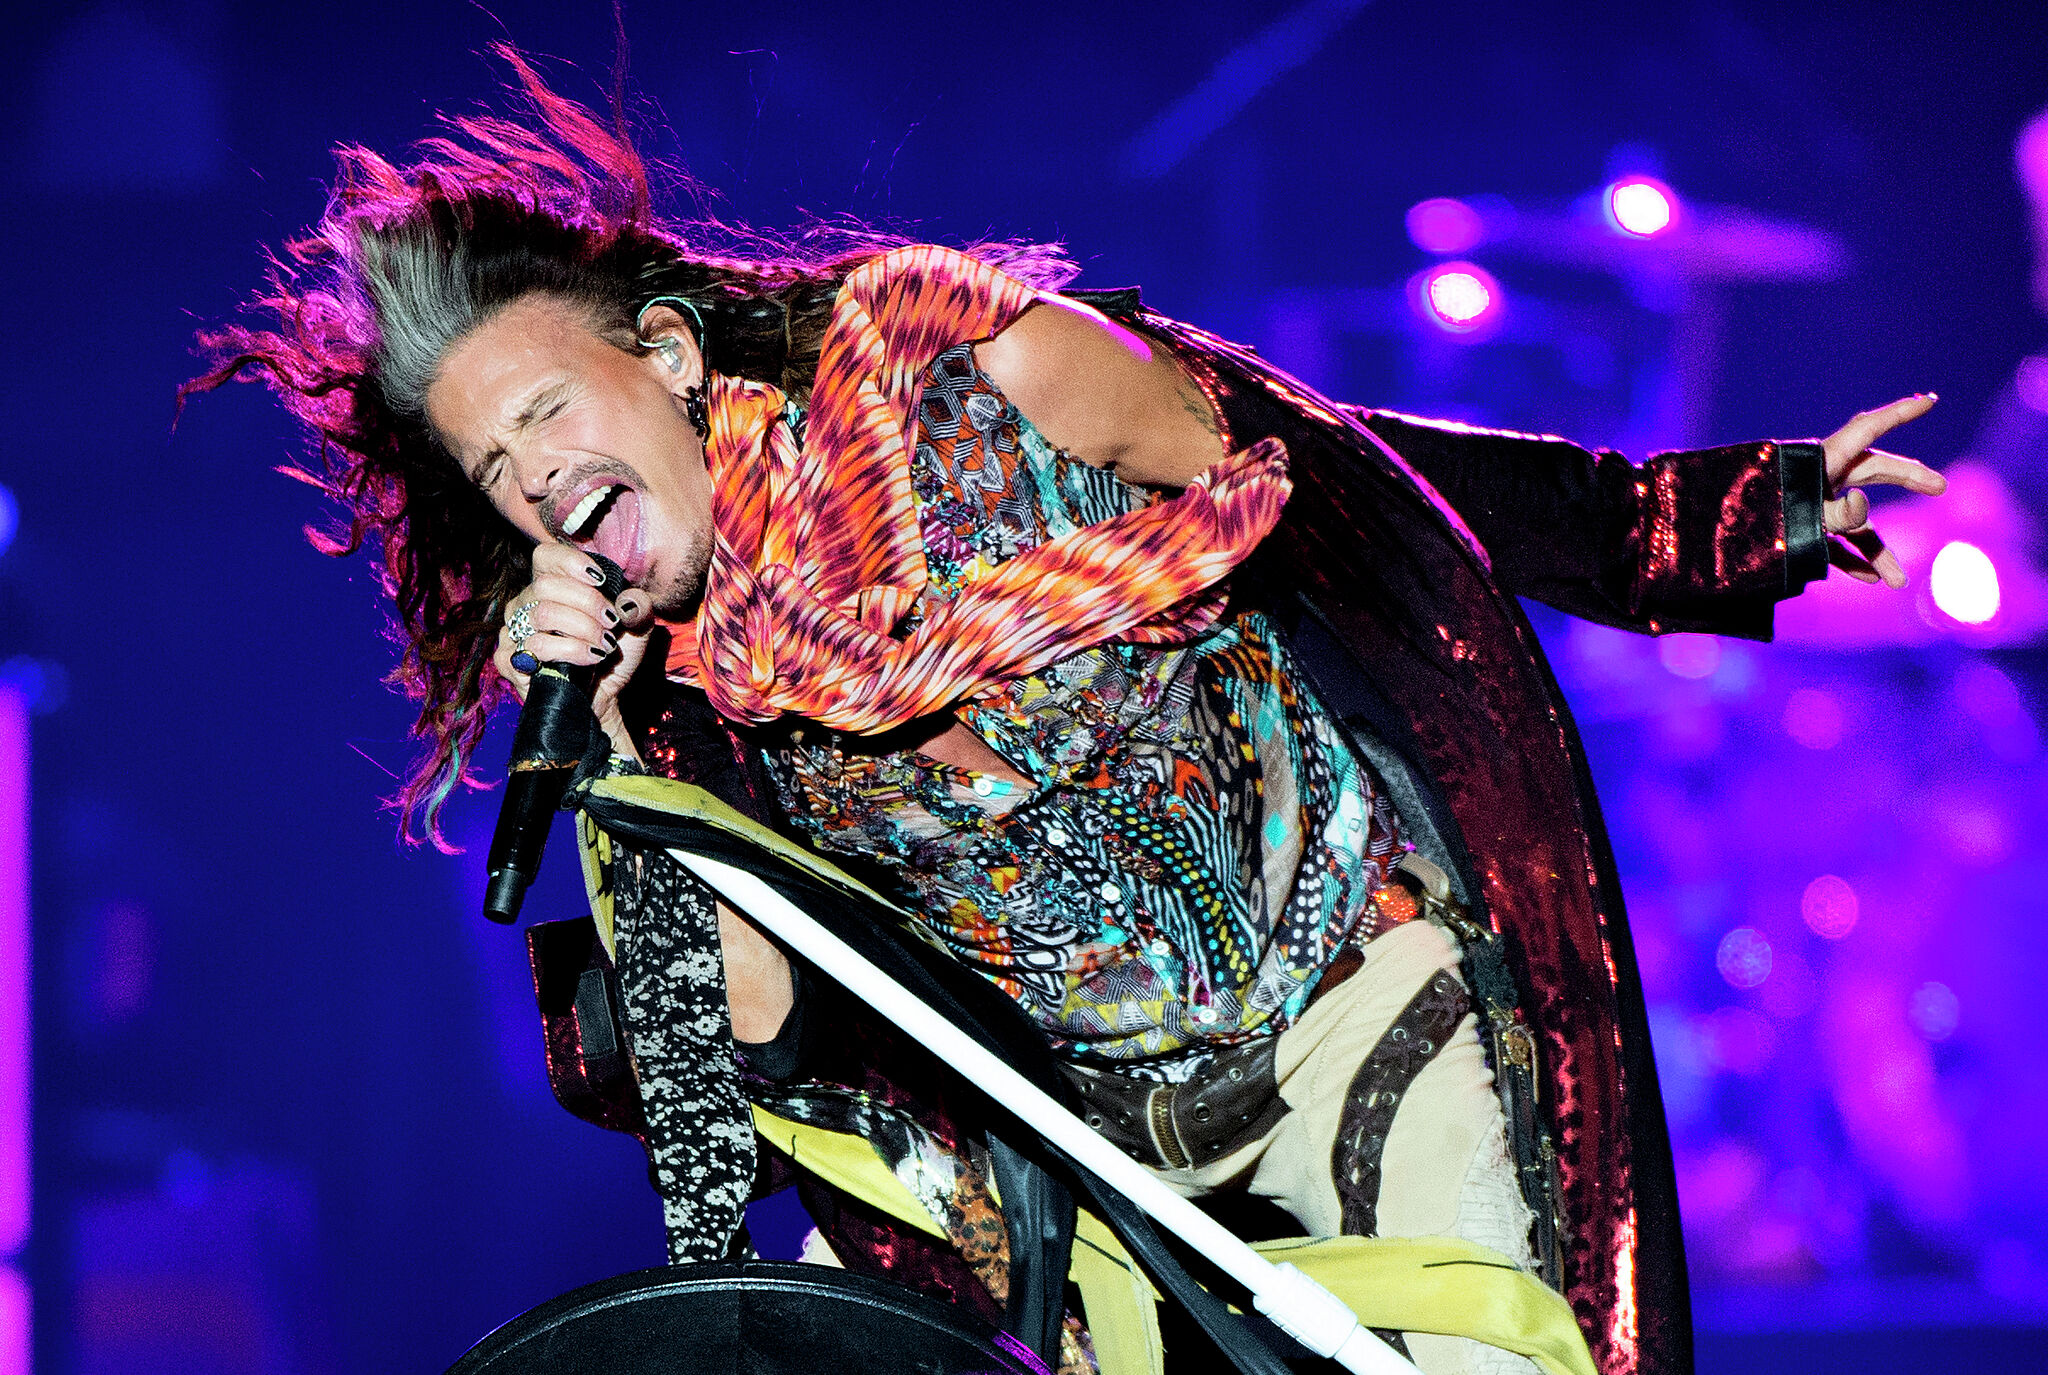 Aerosmith farewell tour adds show at San Antonio's AT&T Center